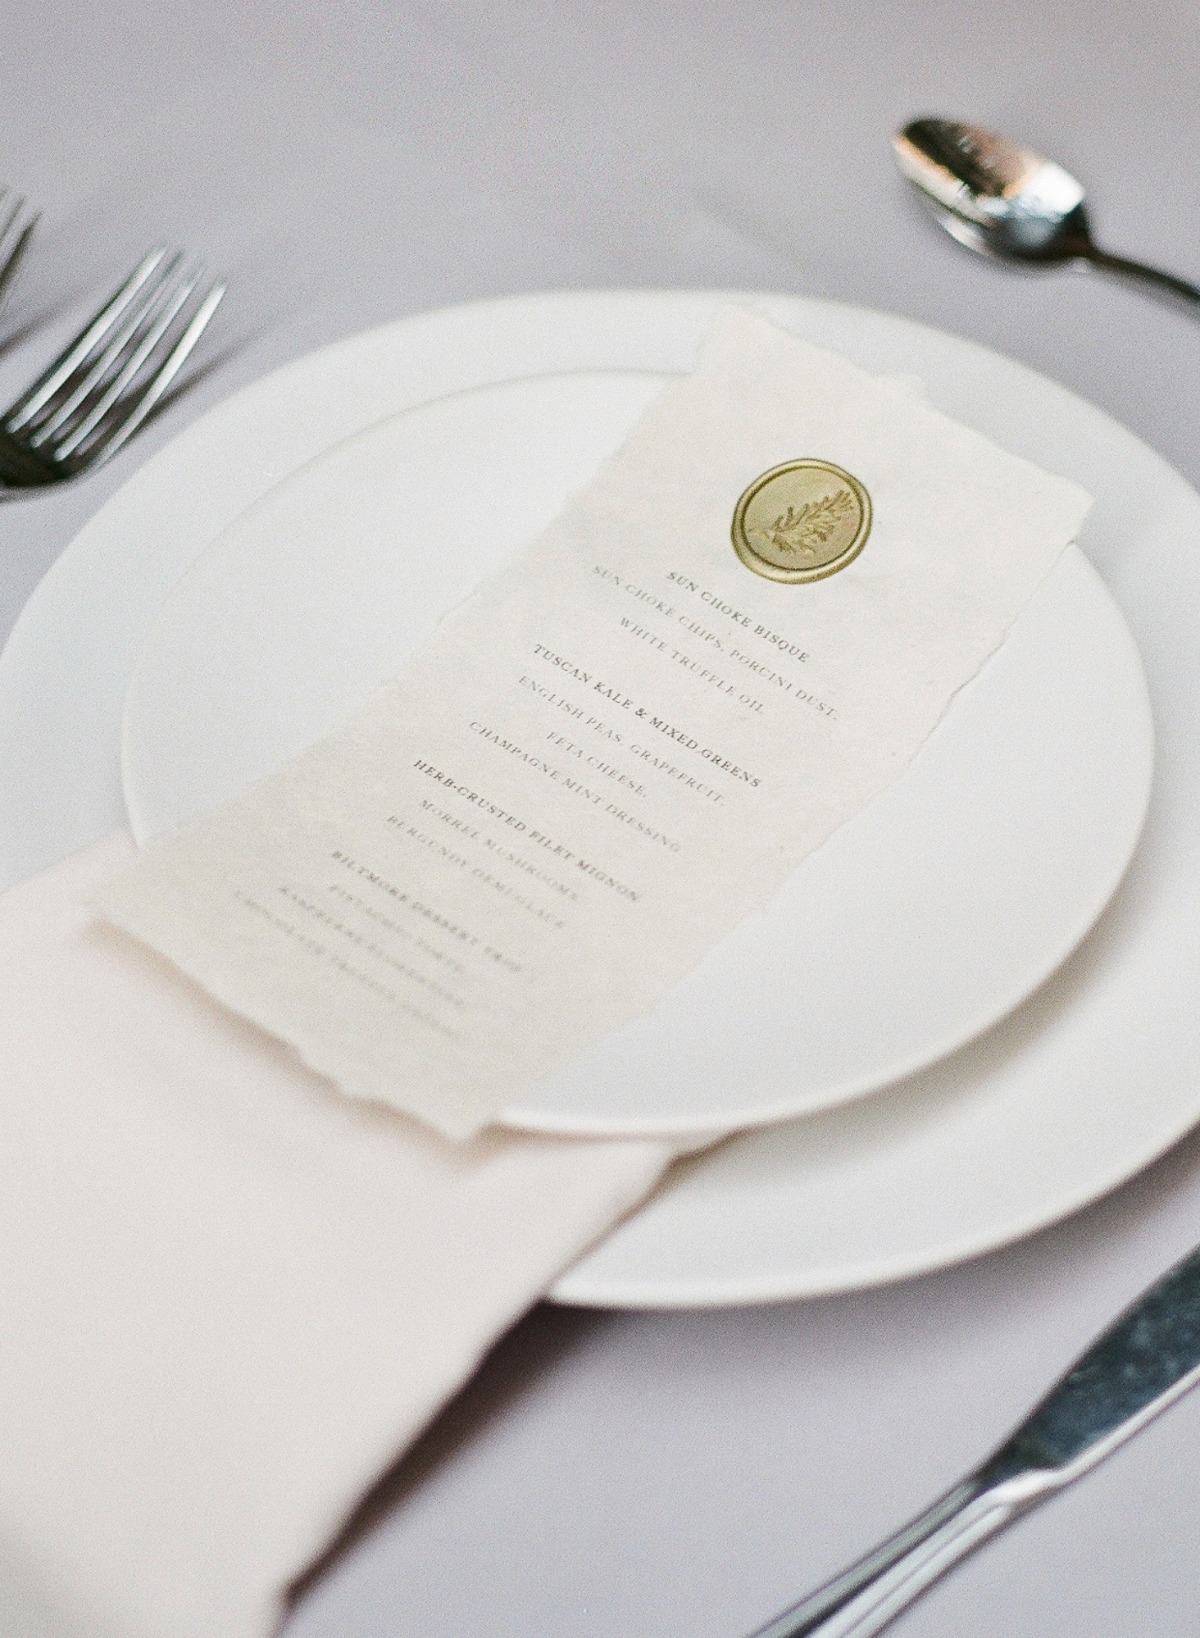 handmade paper with wedding menu printed